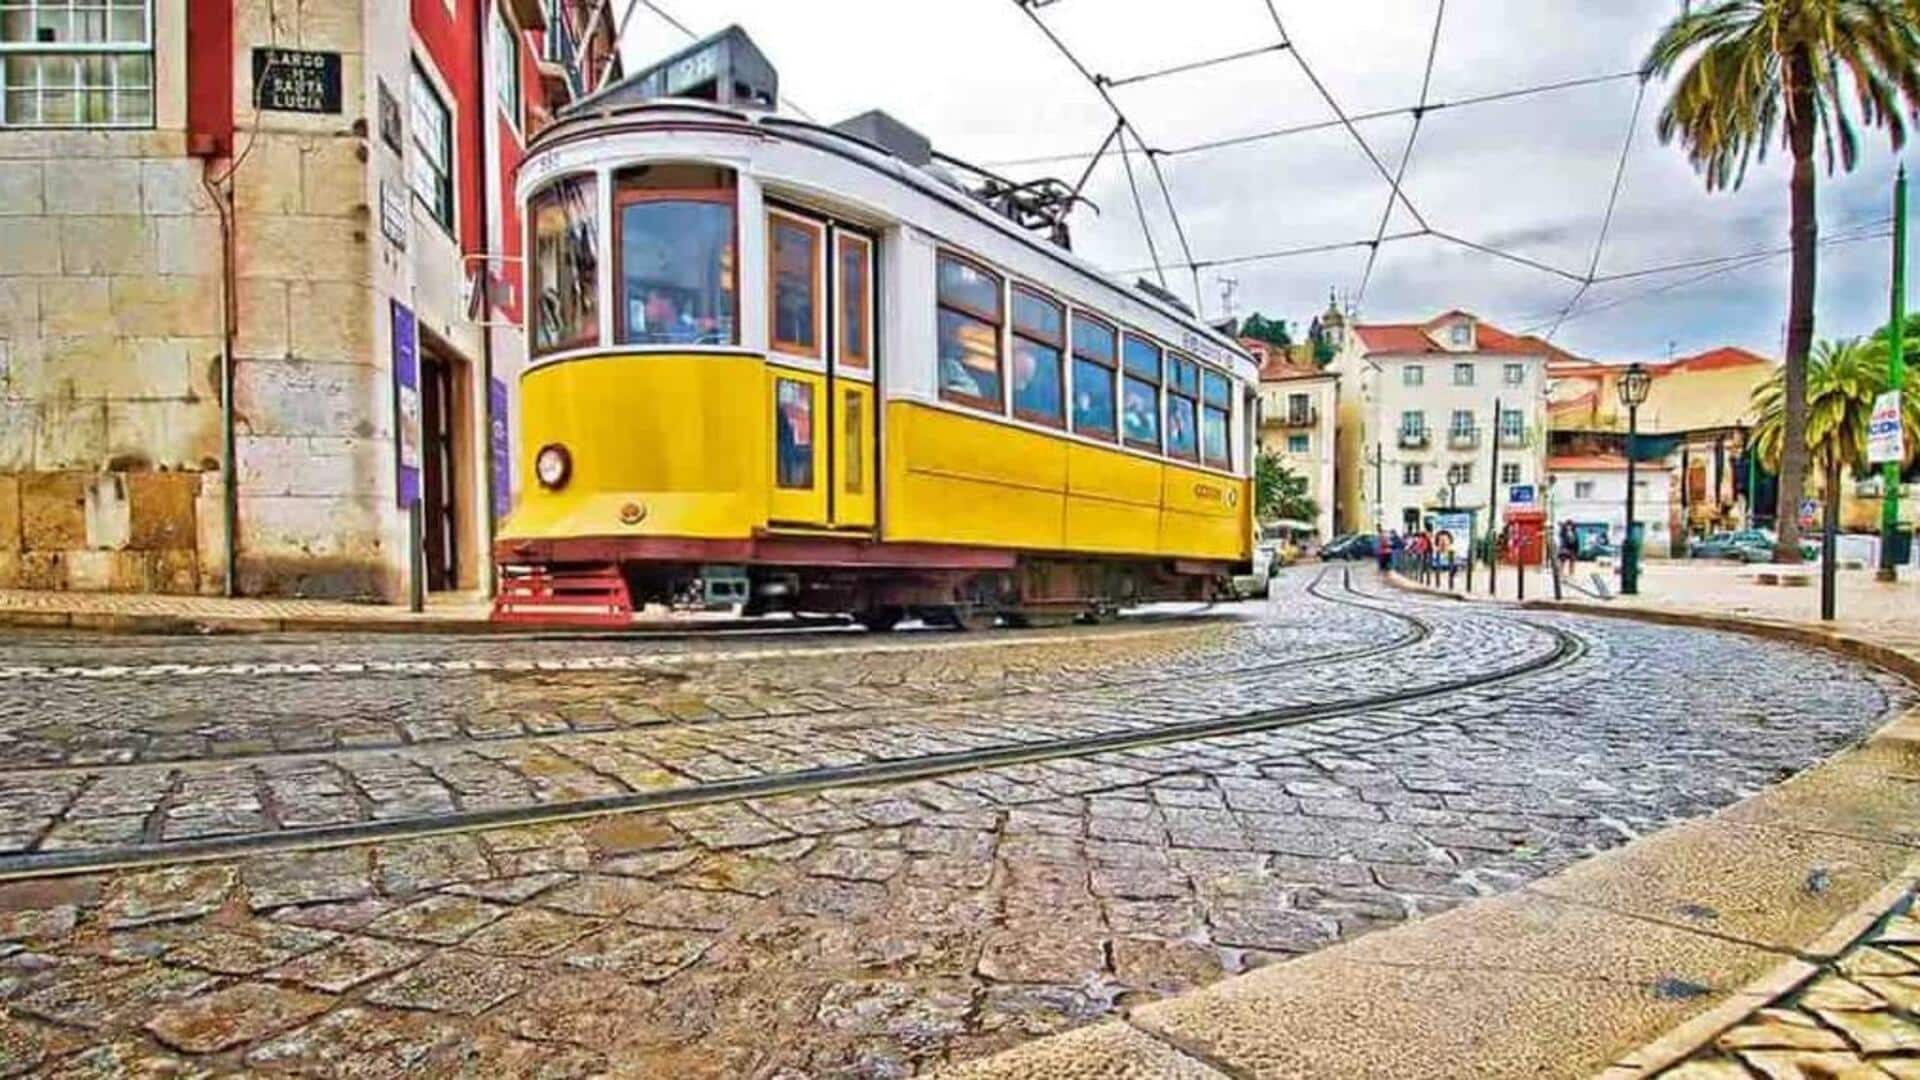 Have you explored Lisbon's vintage tramways yet